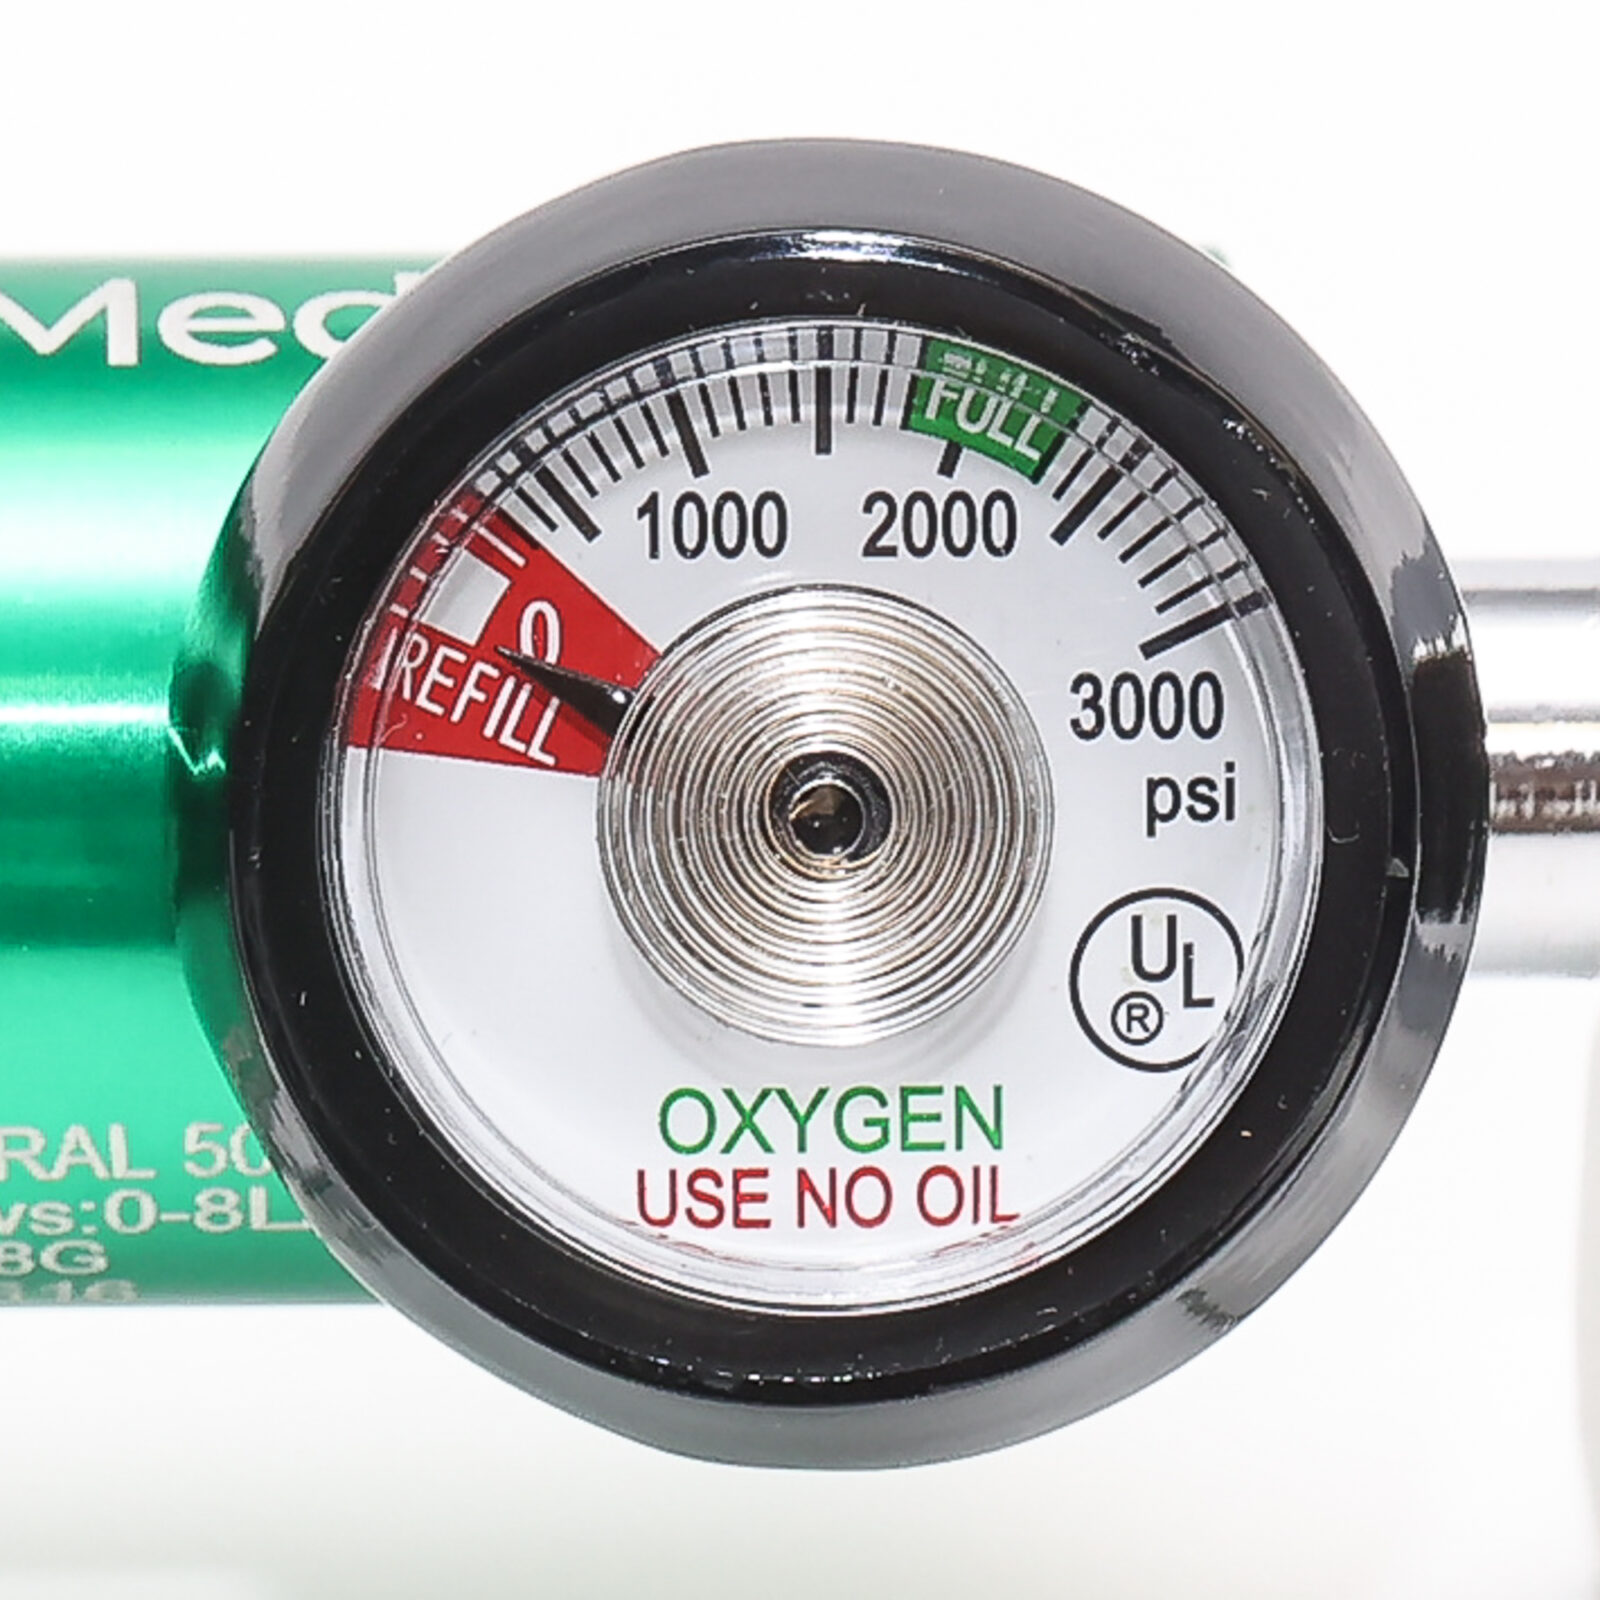 cga540 oxygen tank regulator